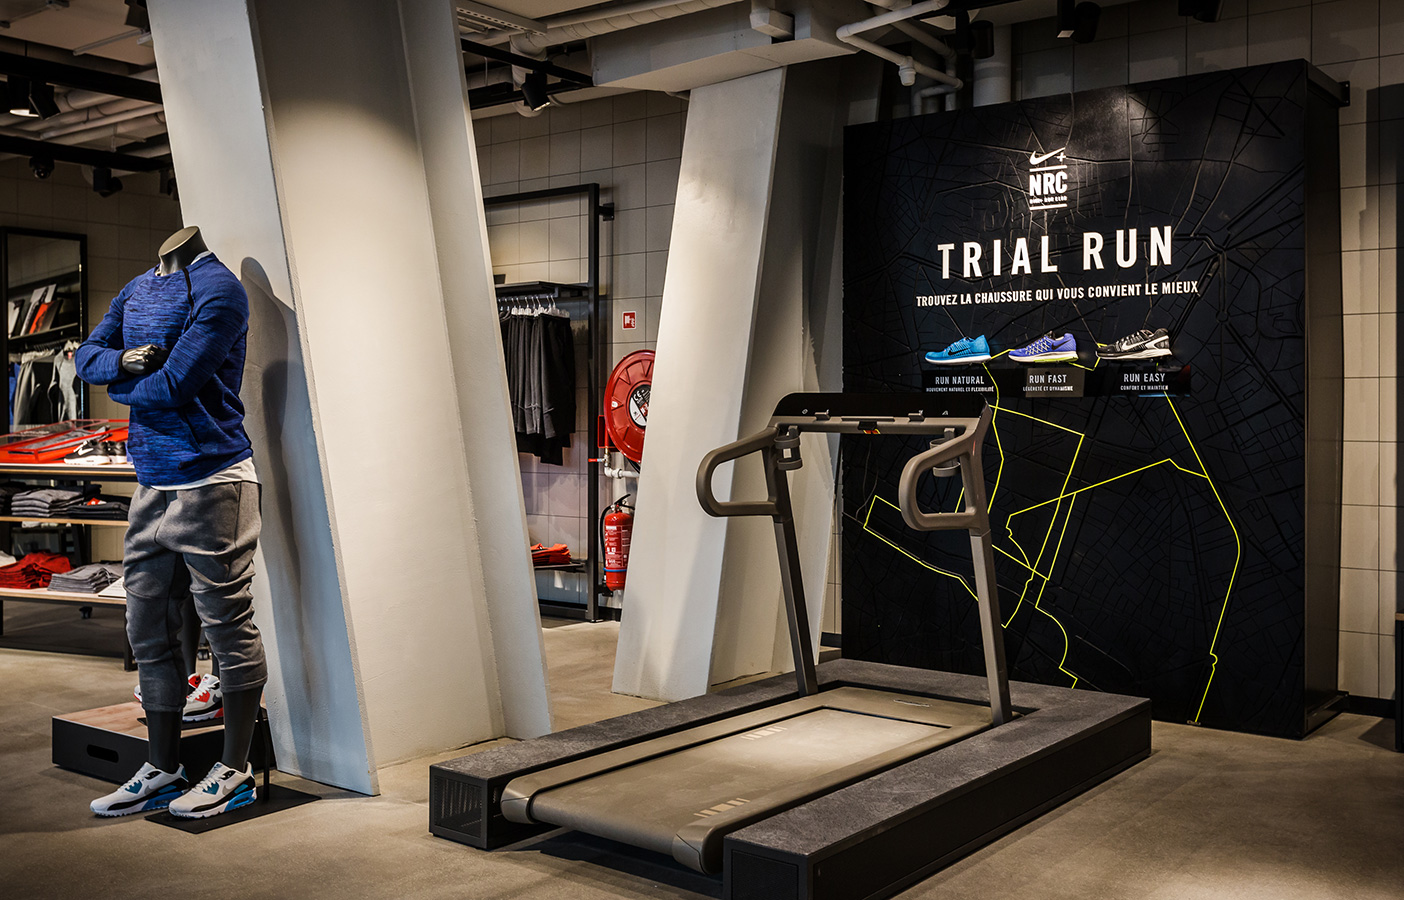 Aldworth James & Bond | Nike Store Les Halles - Trial Run map by AJ&B CNC team